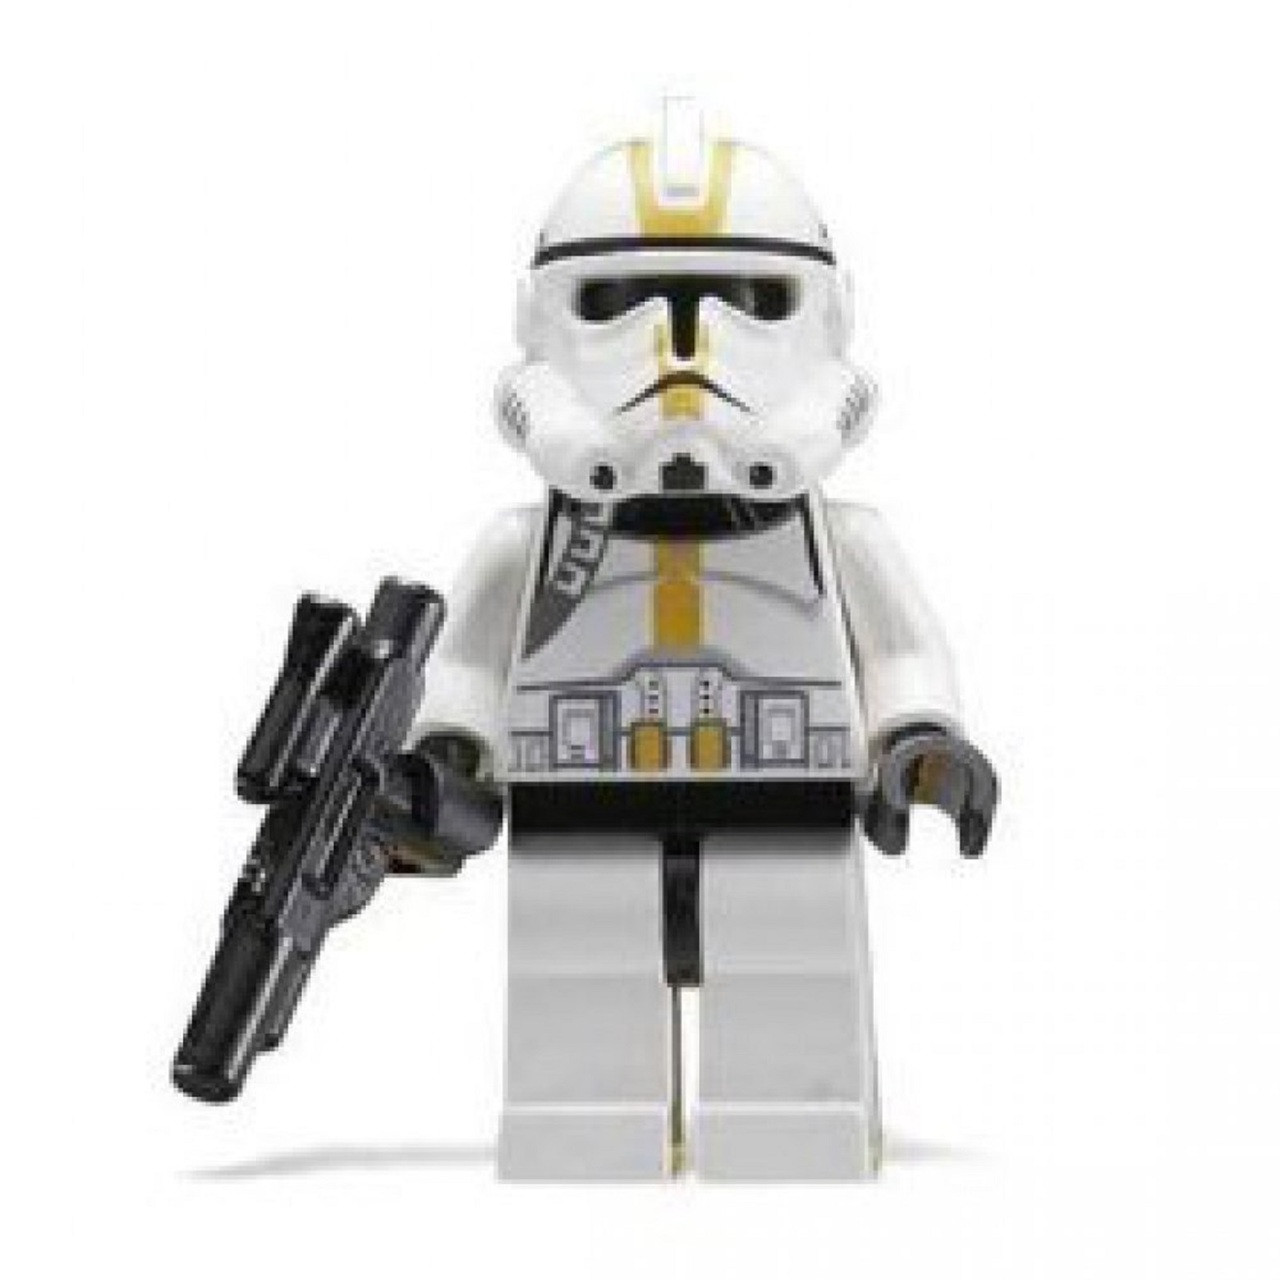 lego star wars clone figures